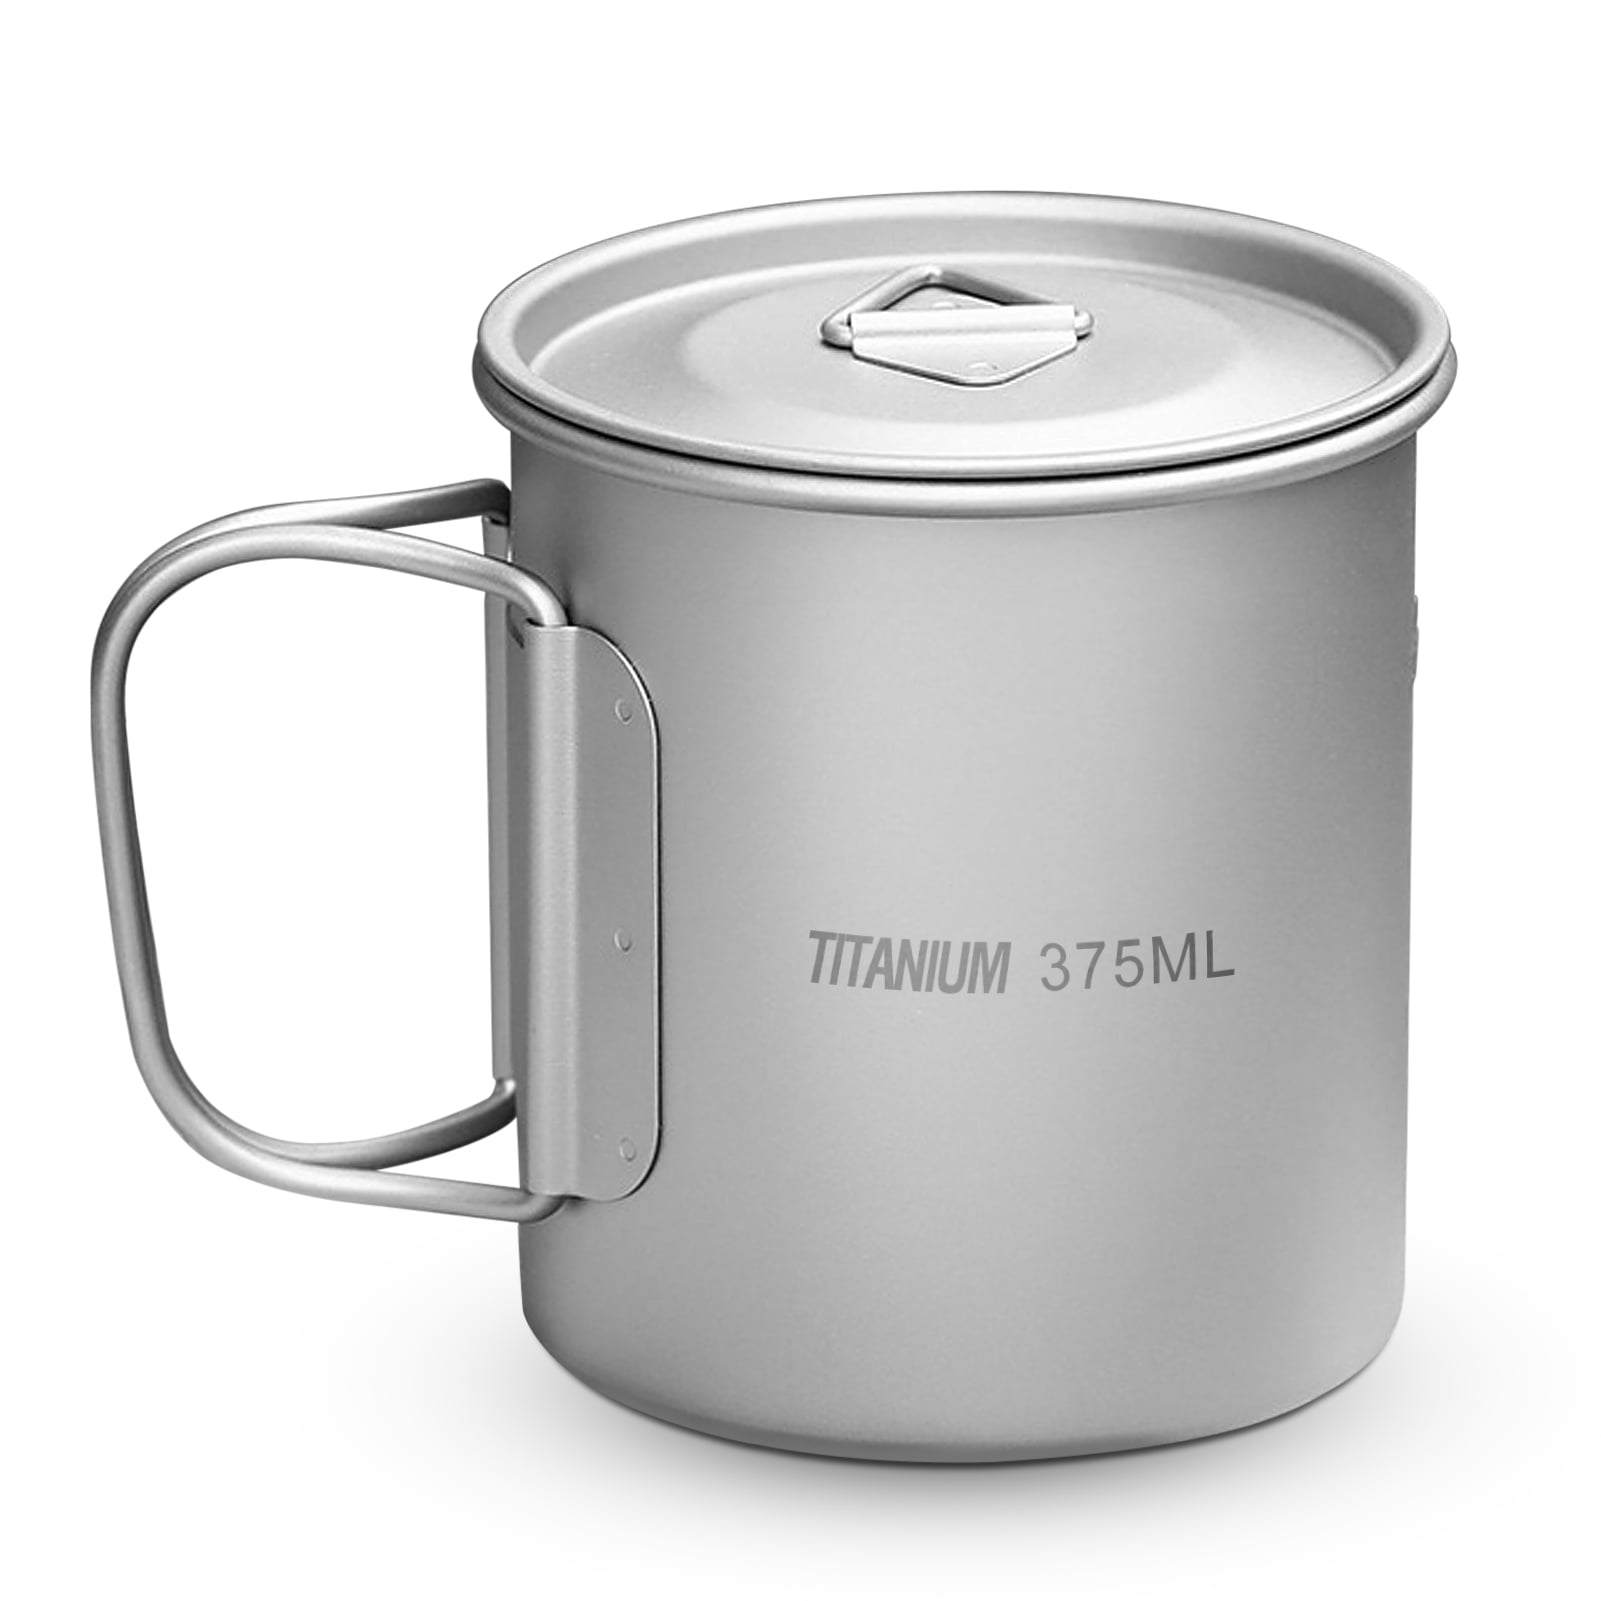 MagiDeal Mini Titanium Tea Cup Outdoor Camping Mug Wine Beer Coffee Mug for Picnic BBQ Travel